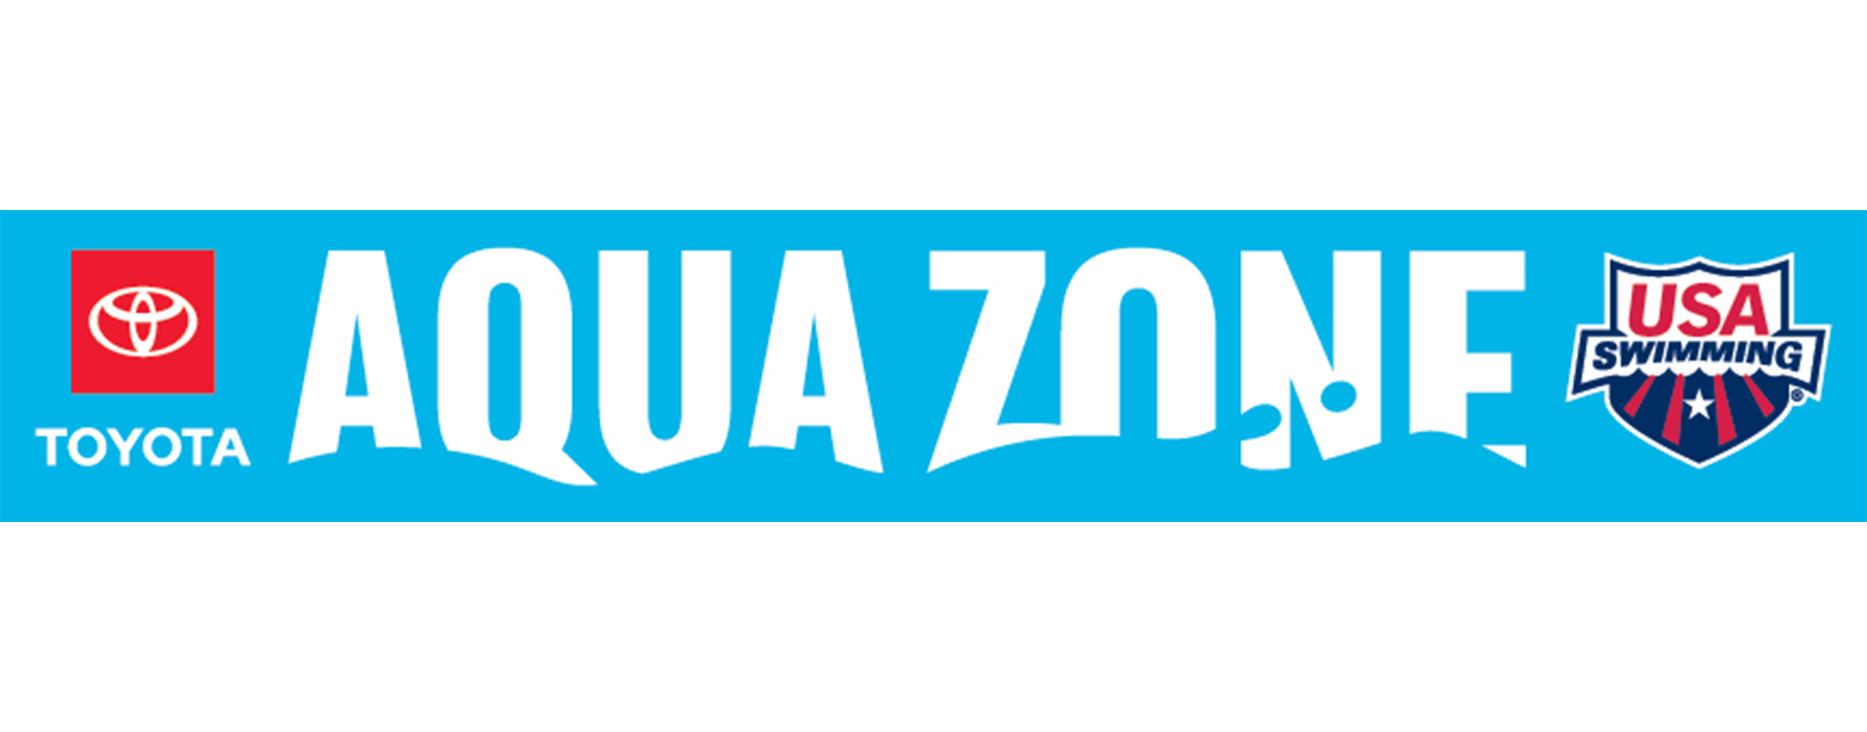 Toyota Aquazone Information